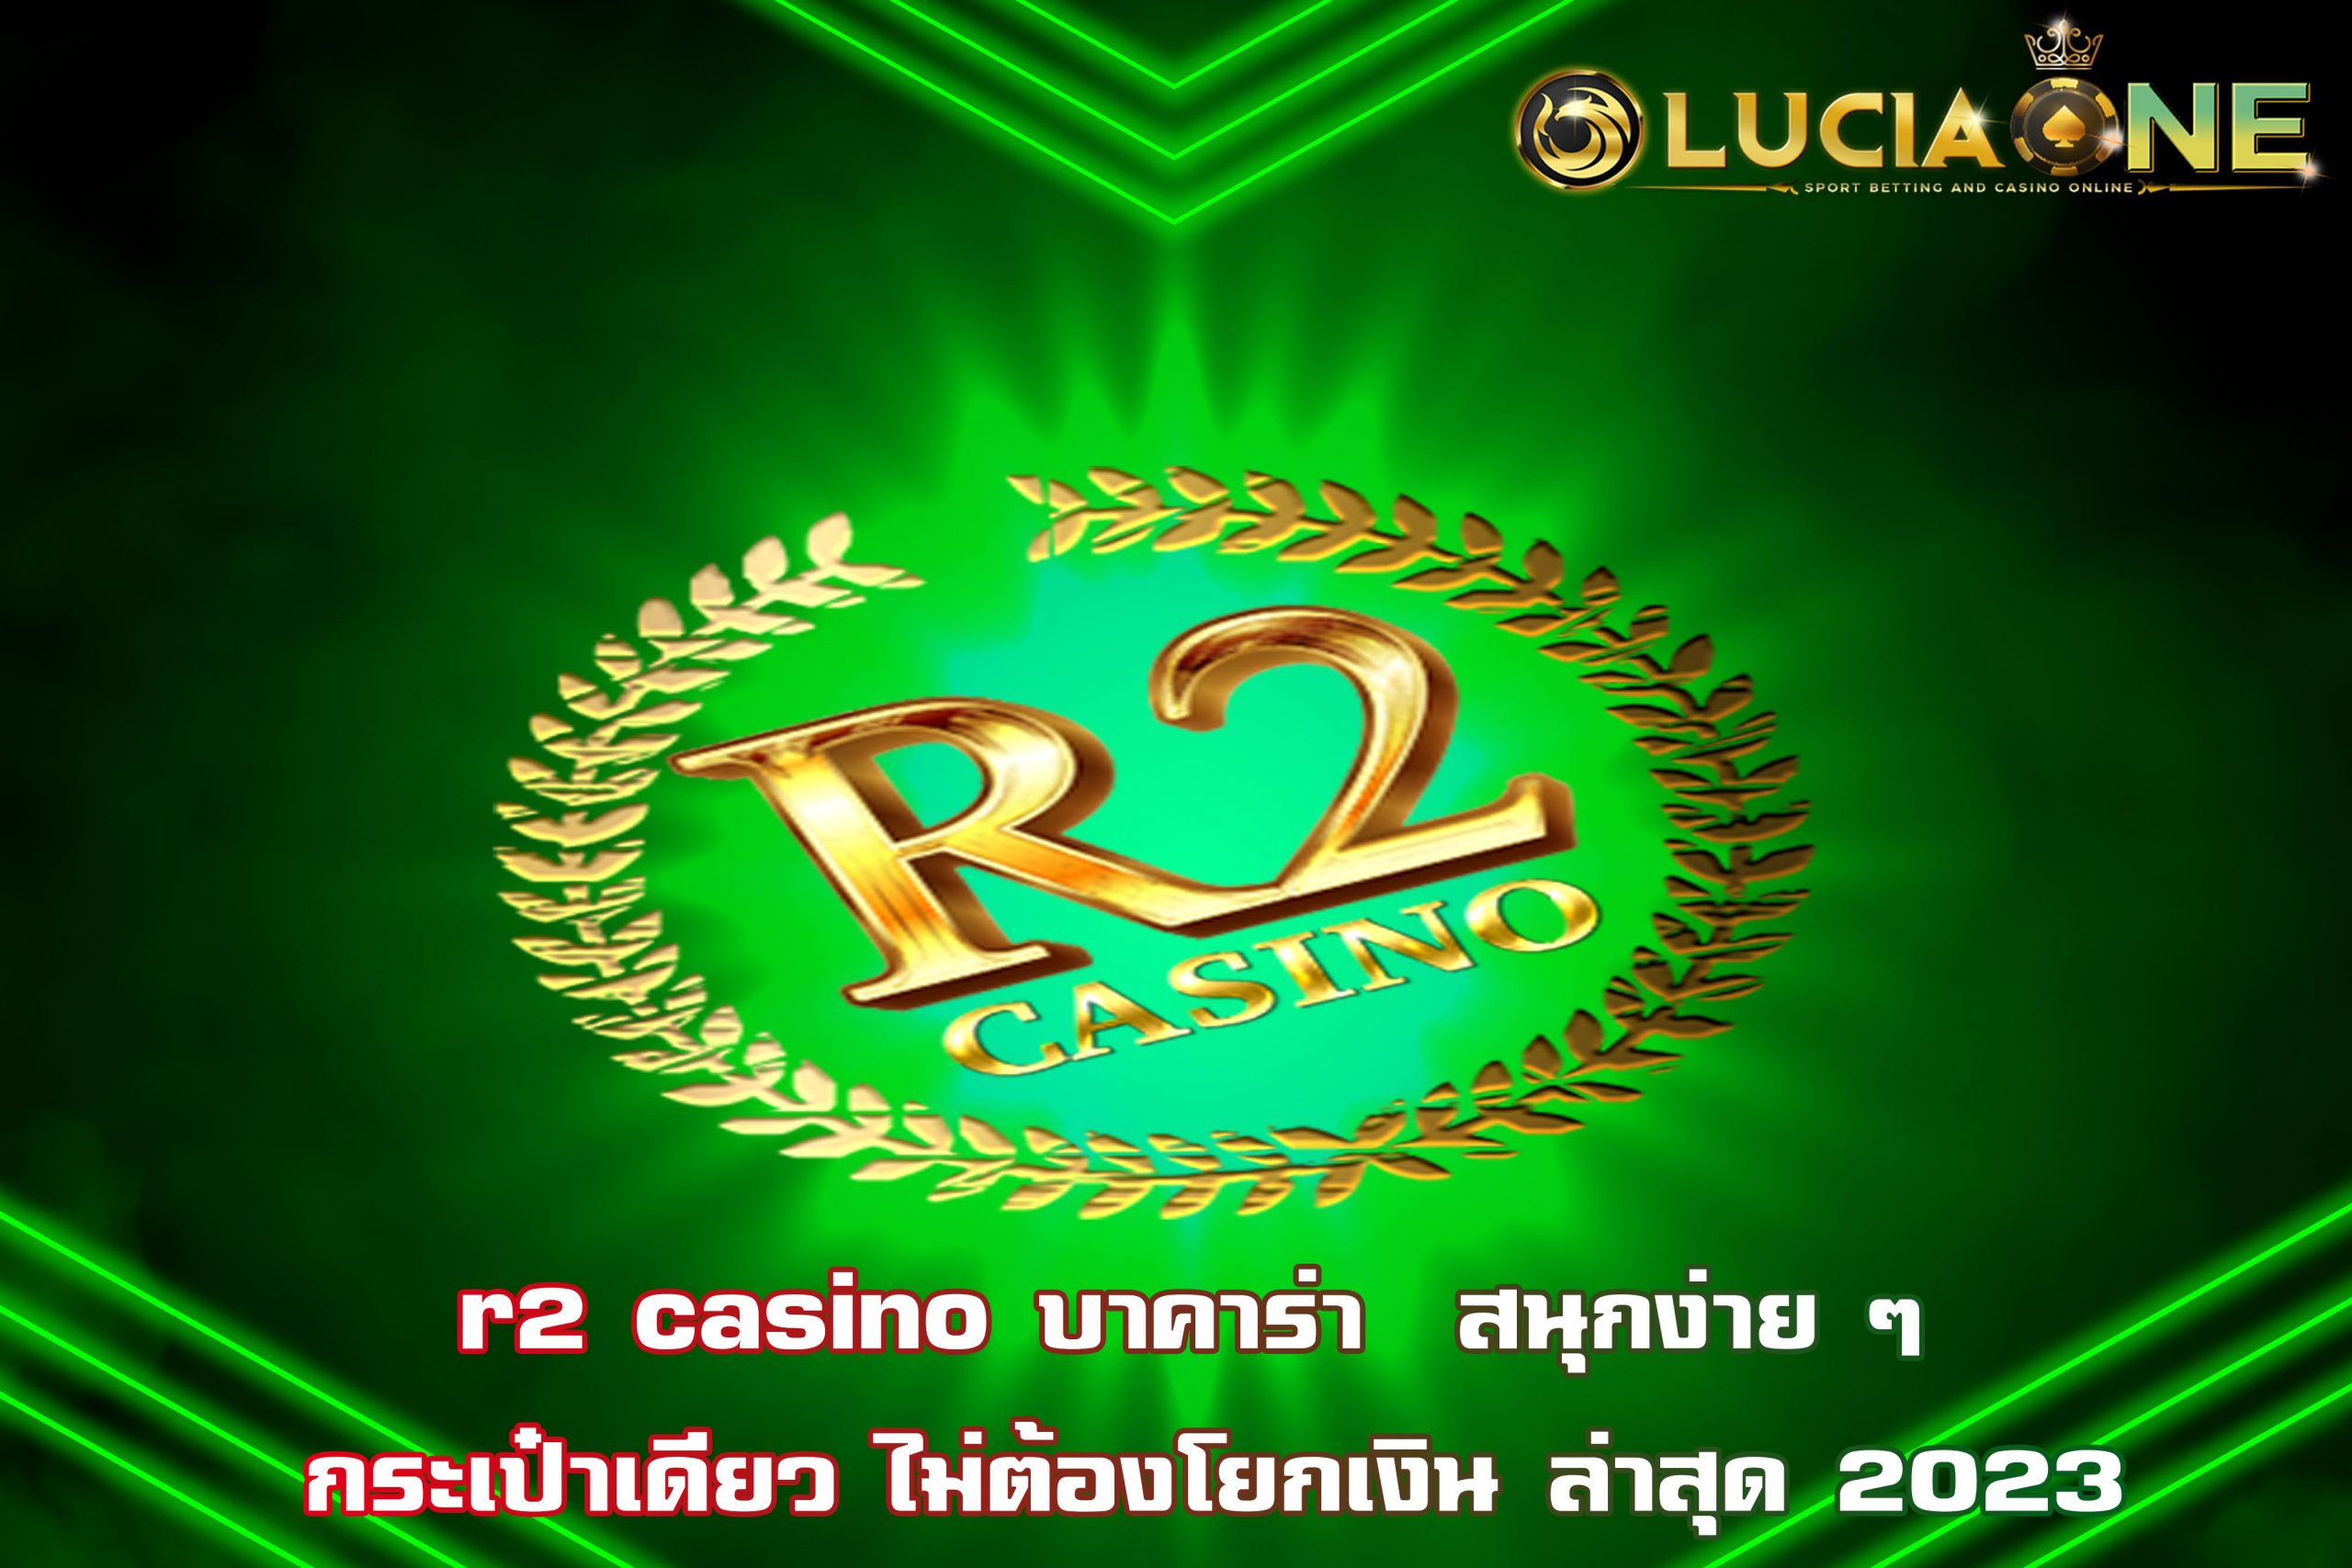 r2 casino บาคาร่า  สนุกง่าย ๆ กระเป๋าเดียว ไม่ต้องโยกเงิน ล่าสุด 2023